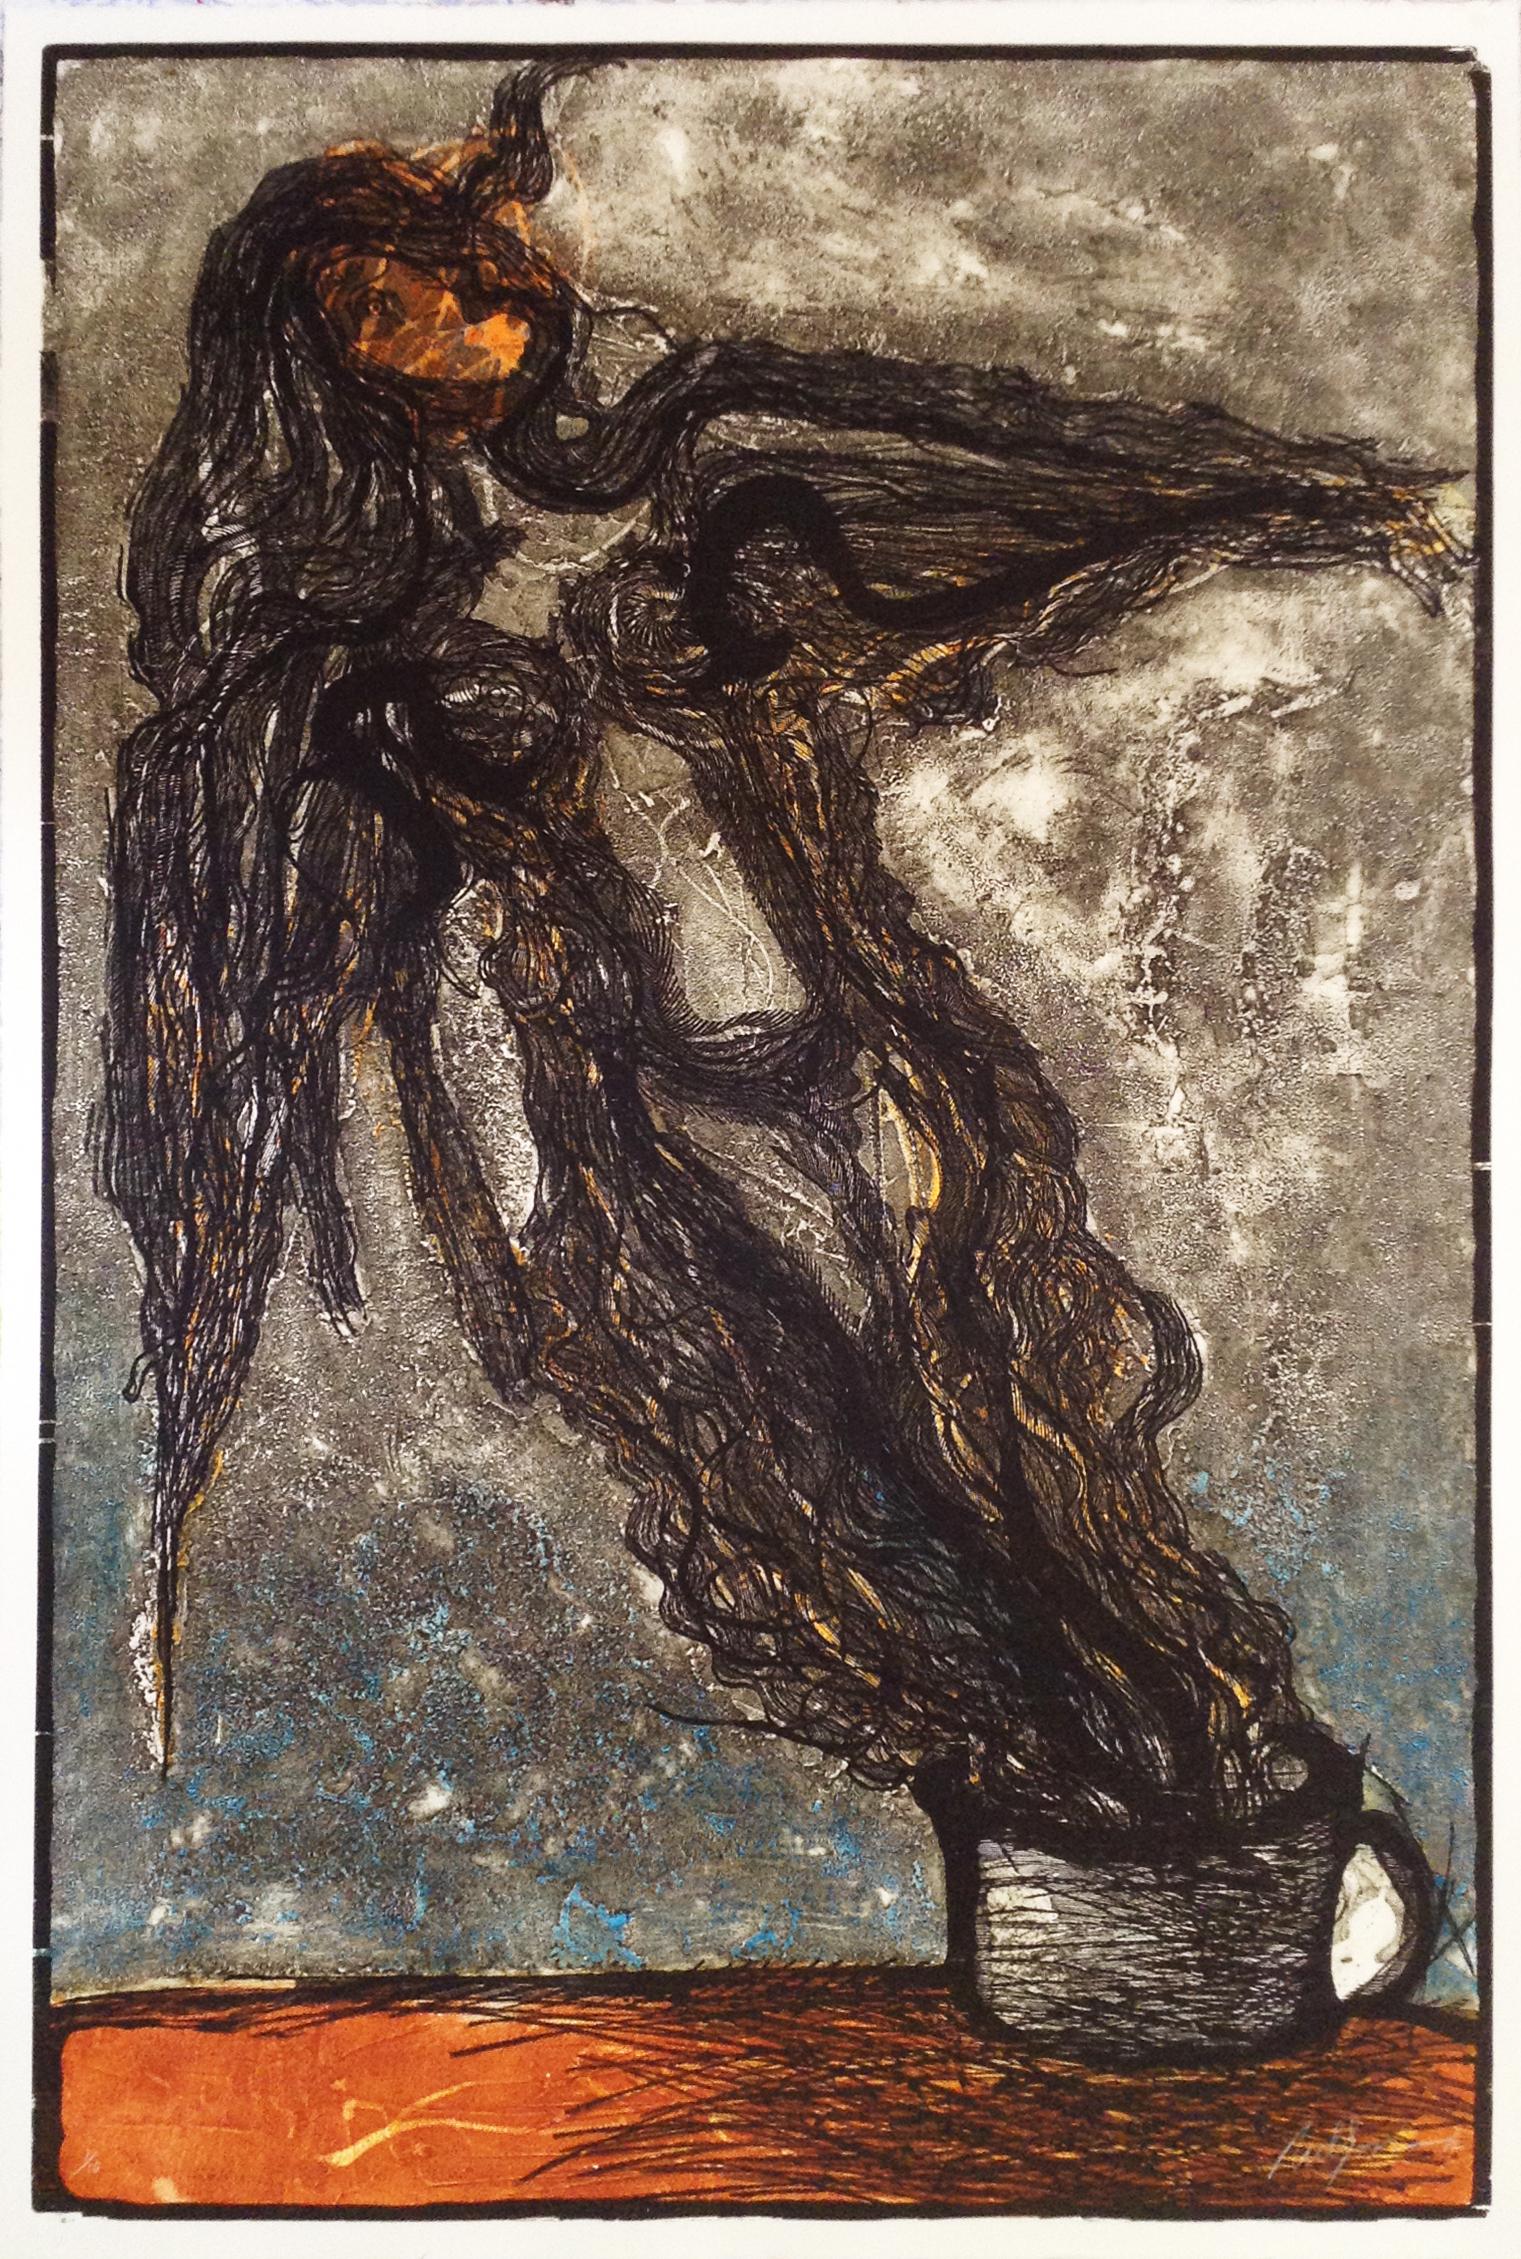 Nelson Dominguez (Cuban, 1947)
'La mujer del café', 2012
Woodcut
124.5 x 84.5 cm. (49 x 33.3 in.)
Edition of 10
Unframed